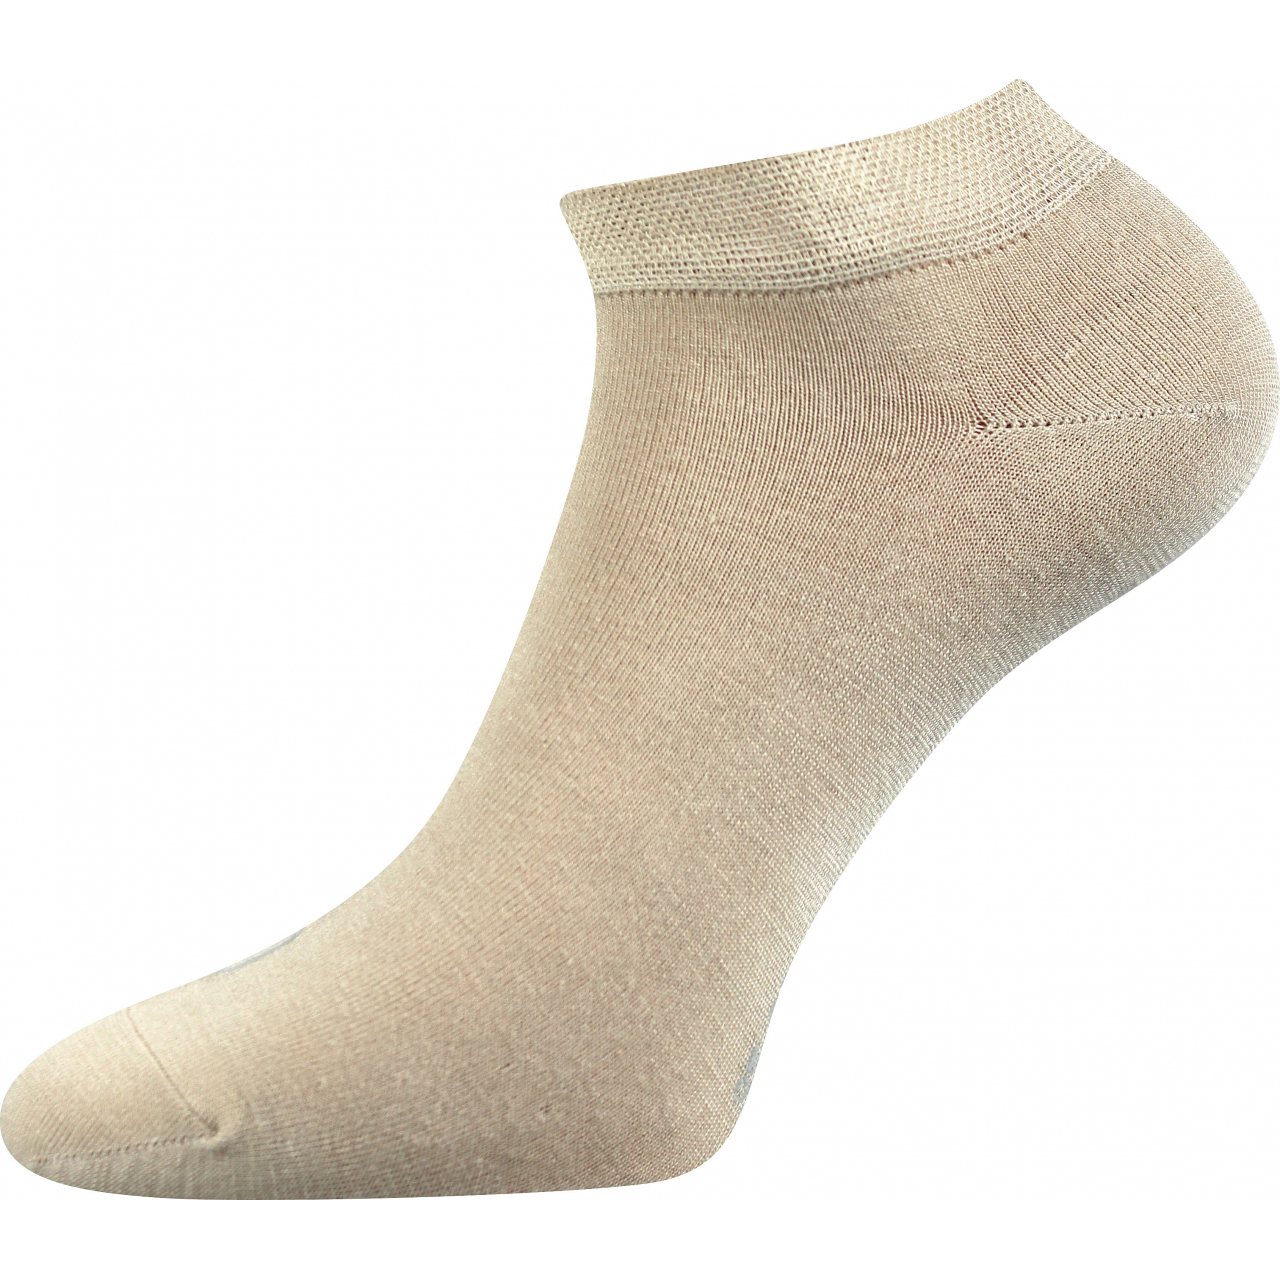 Ponožky unisex klasické Lonka Esi - béžové, 43-46